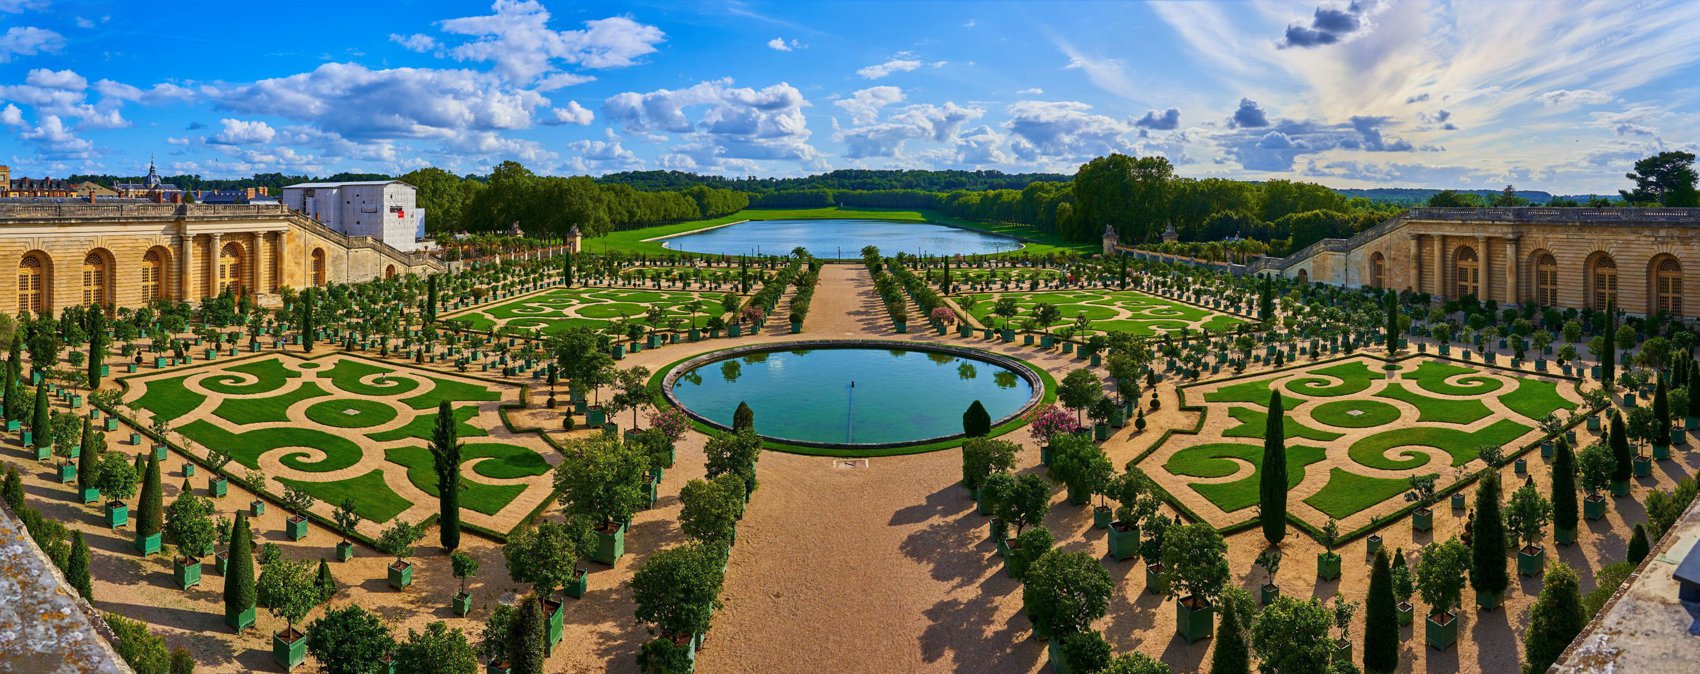 Hero Image forOrangerie @ Chateau de Versailles, Summer 201908